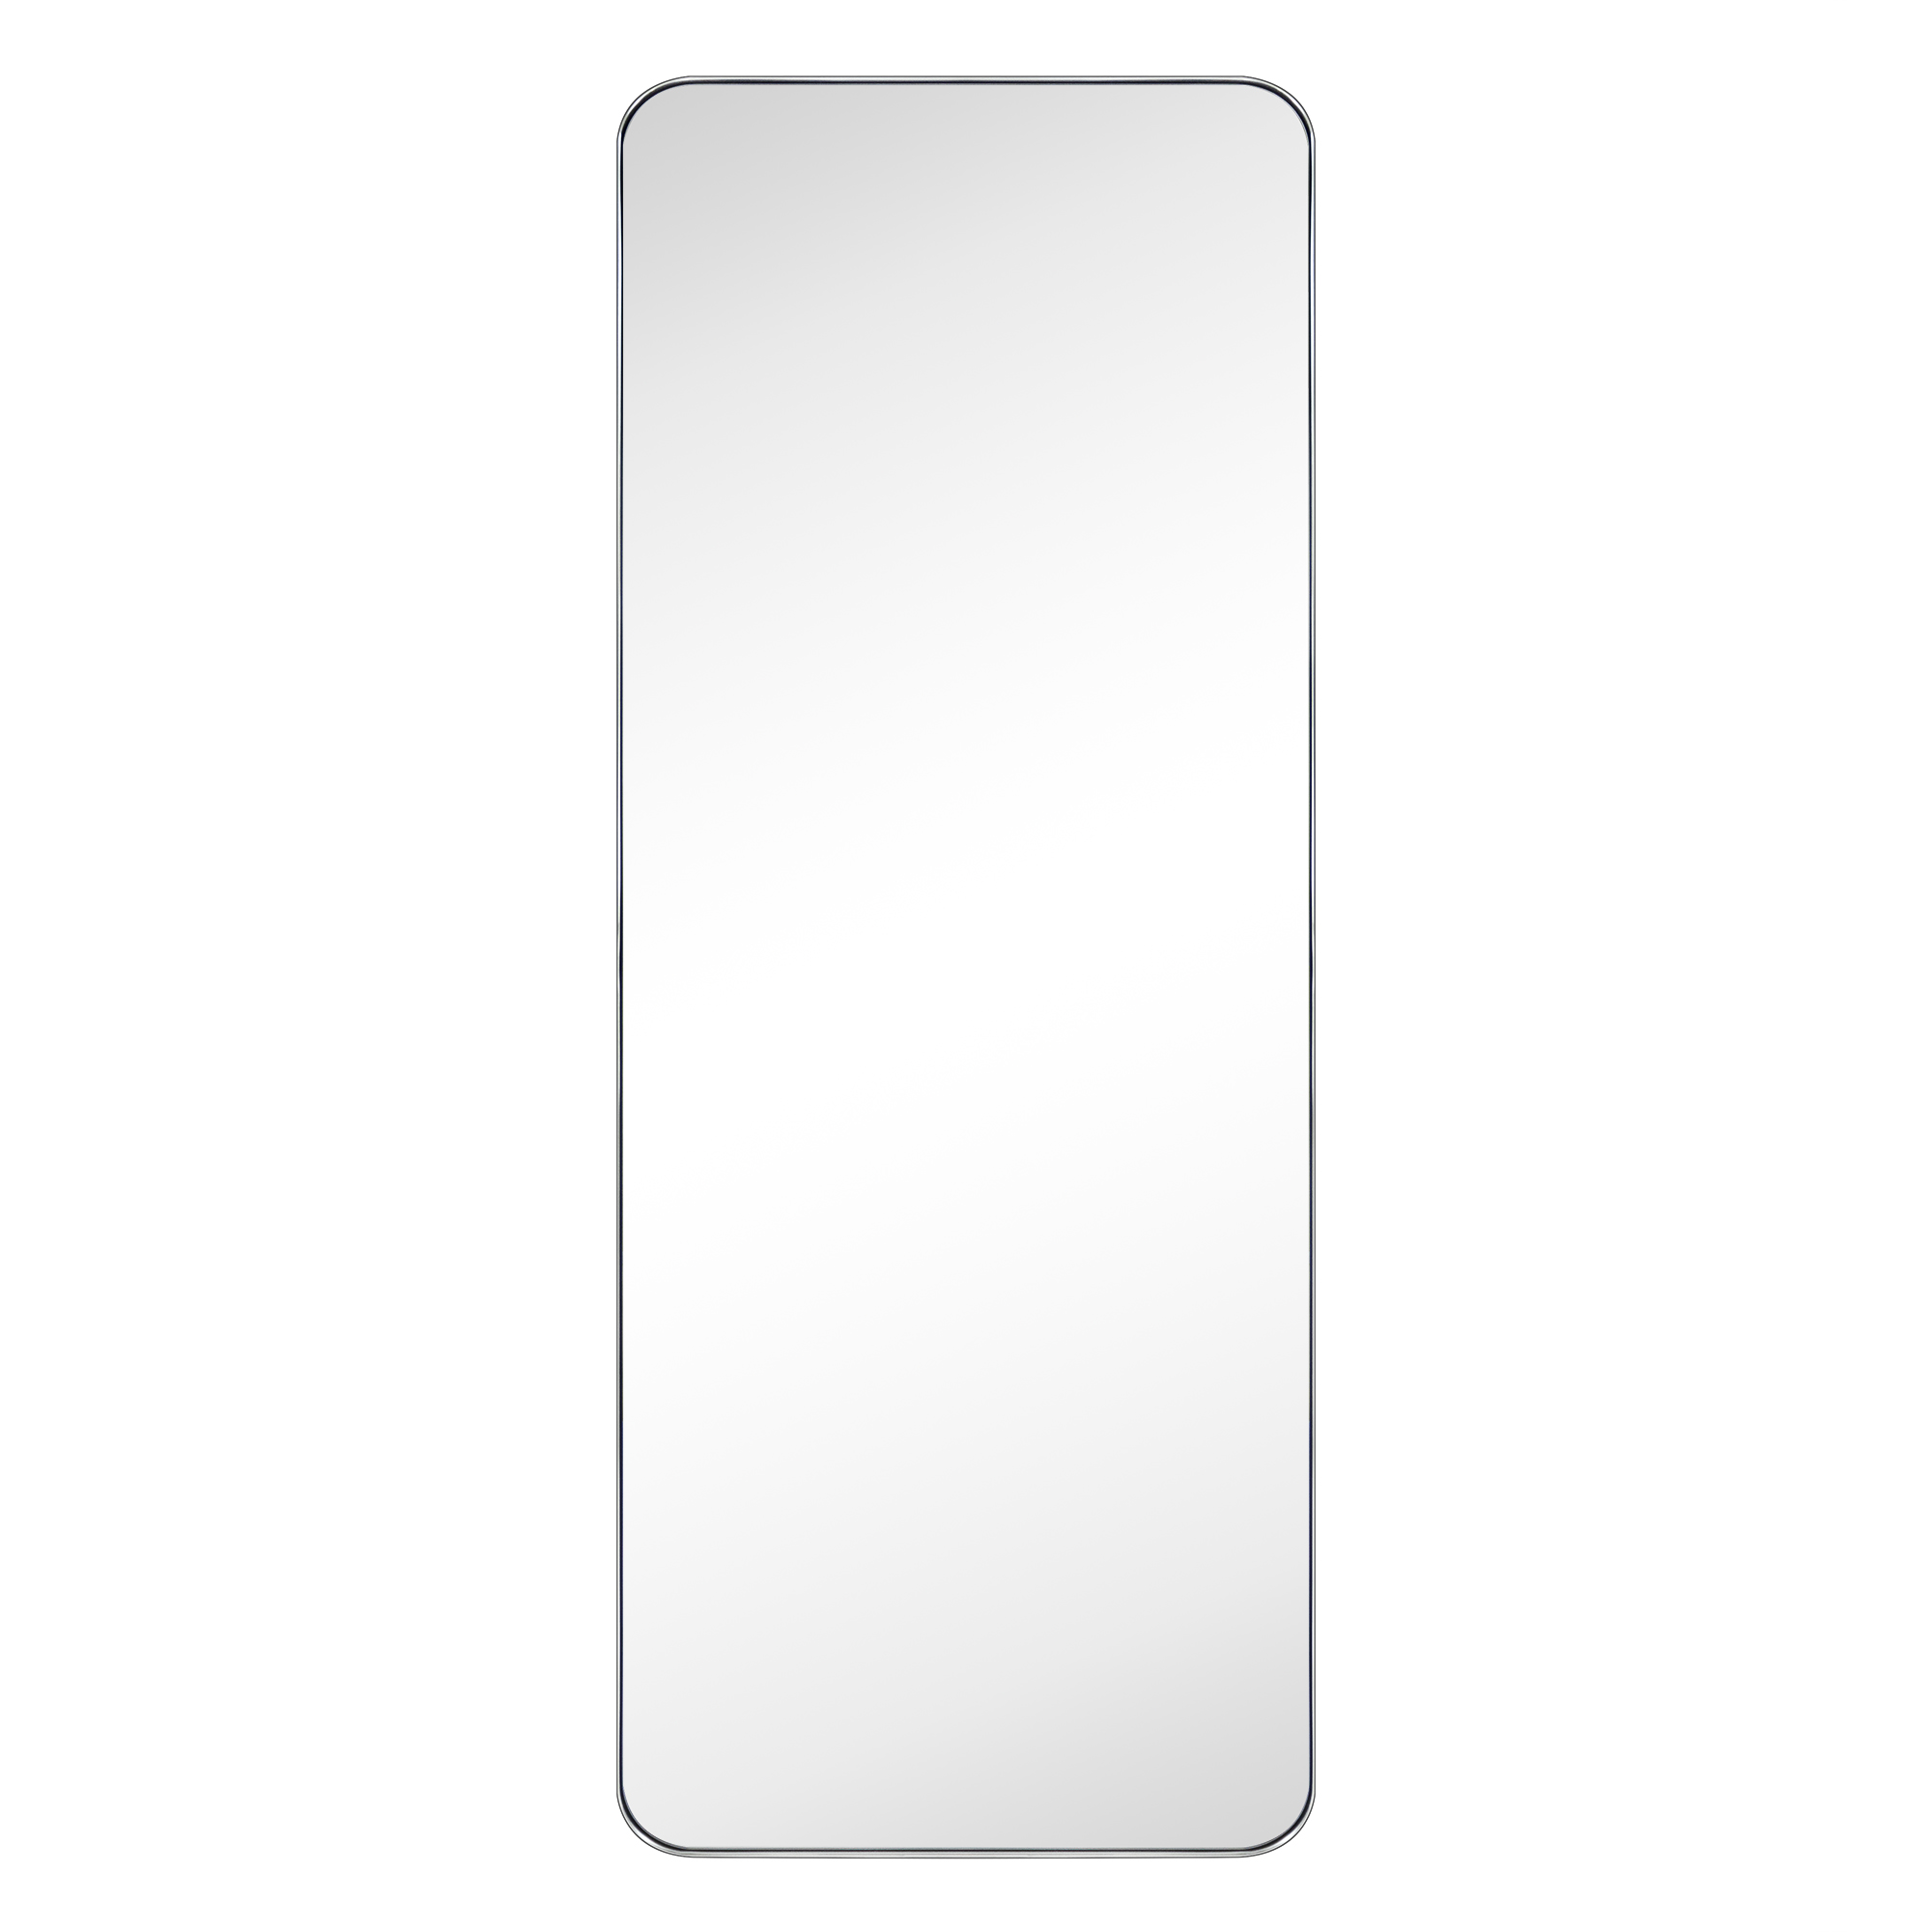 Kengston Modern & Contemporary Rectangular Bathroom Vanity Mirrors-20x55-Chrome